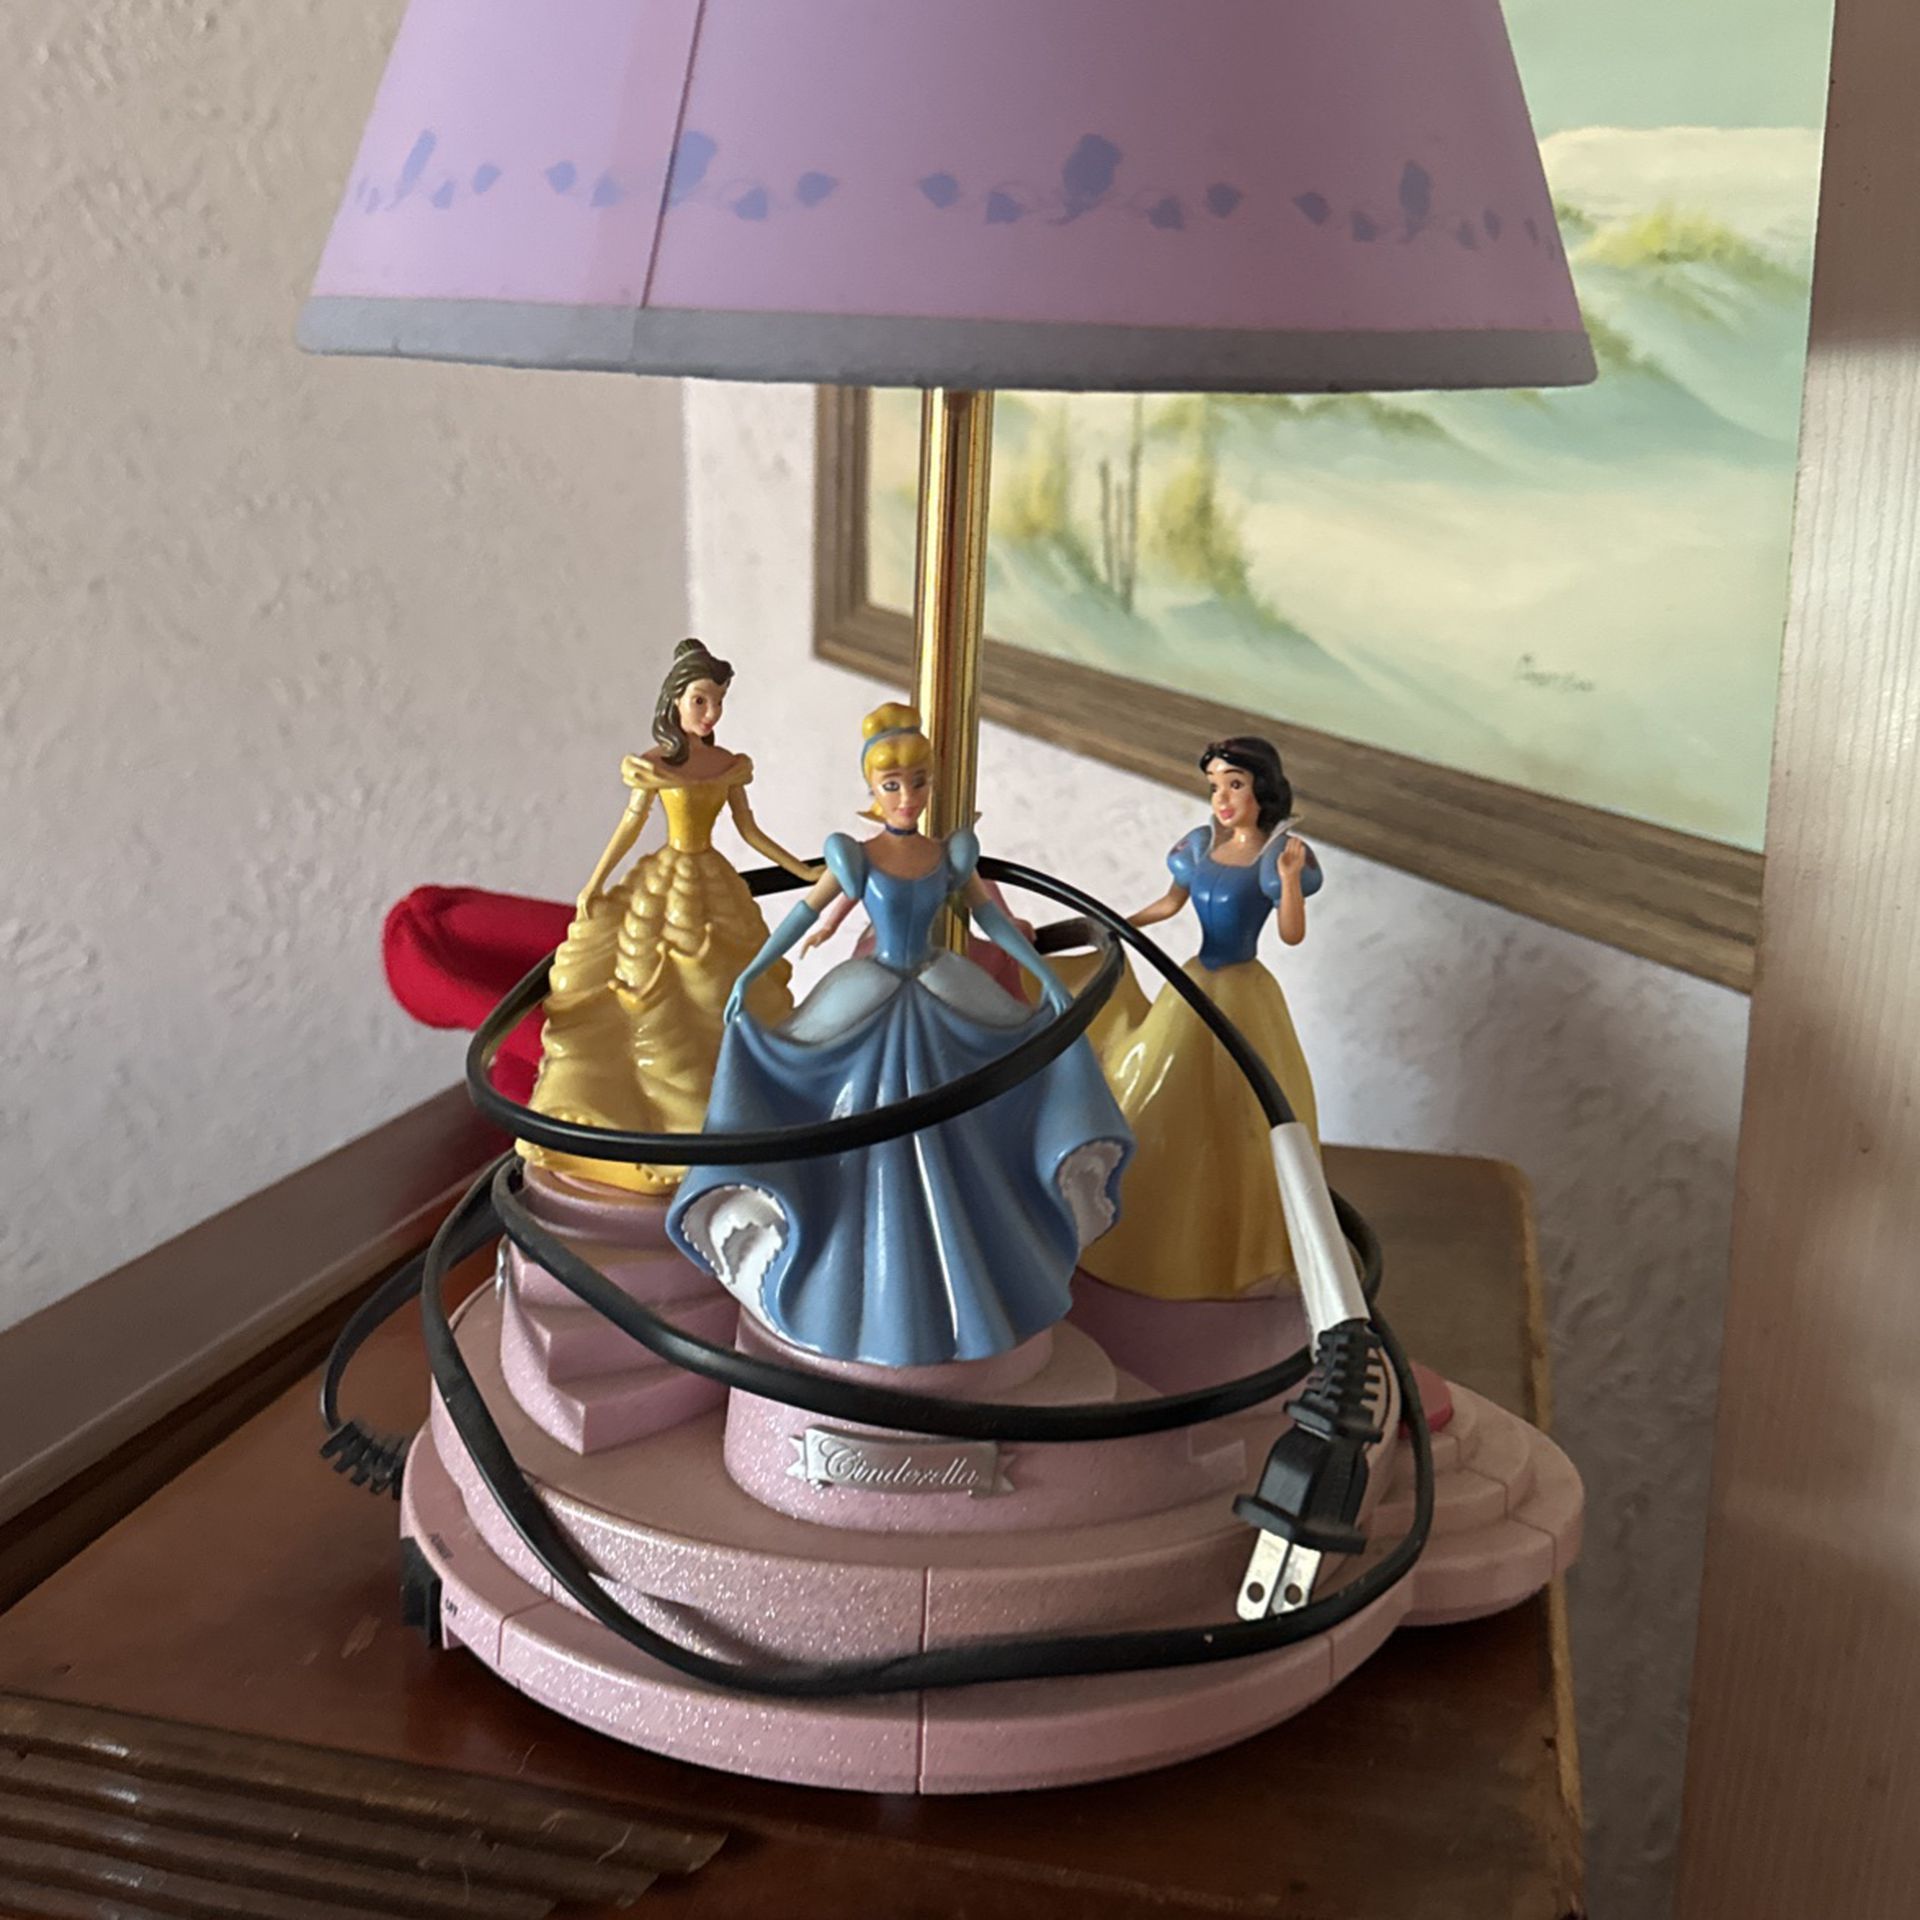 Disney Princess Lamp